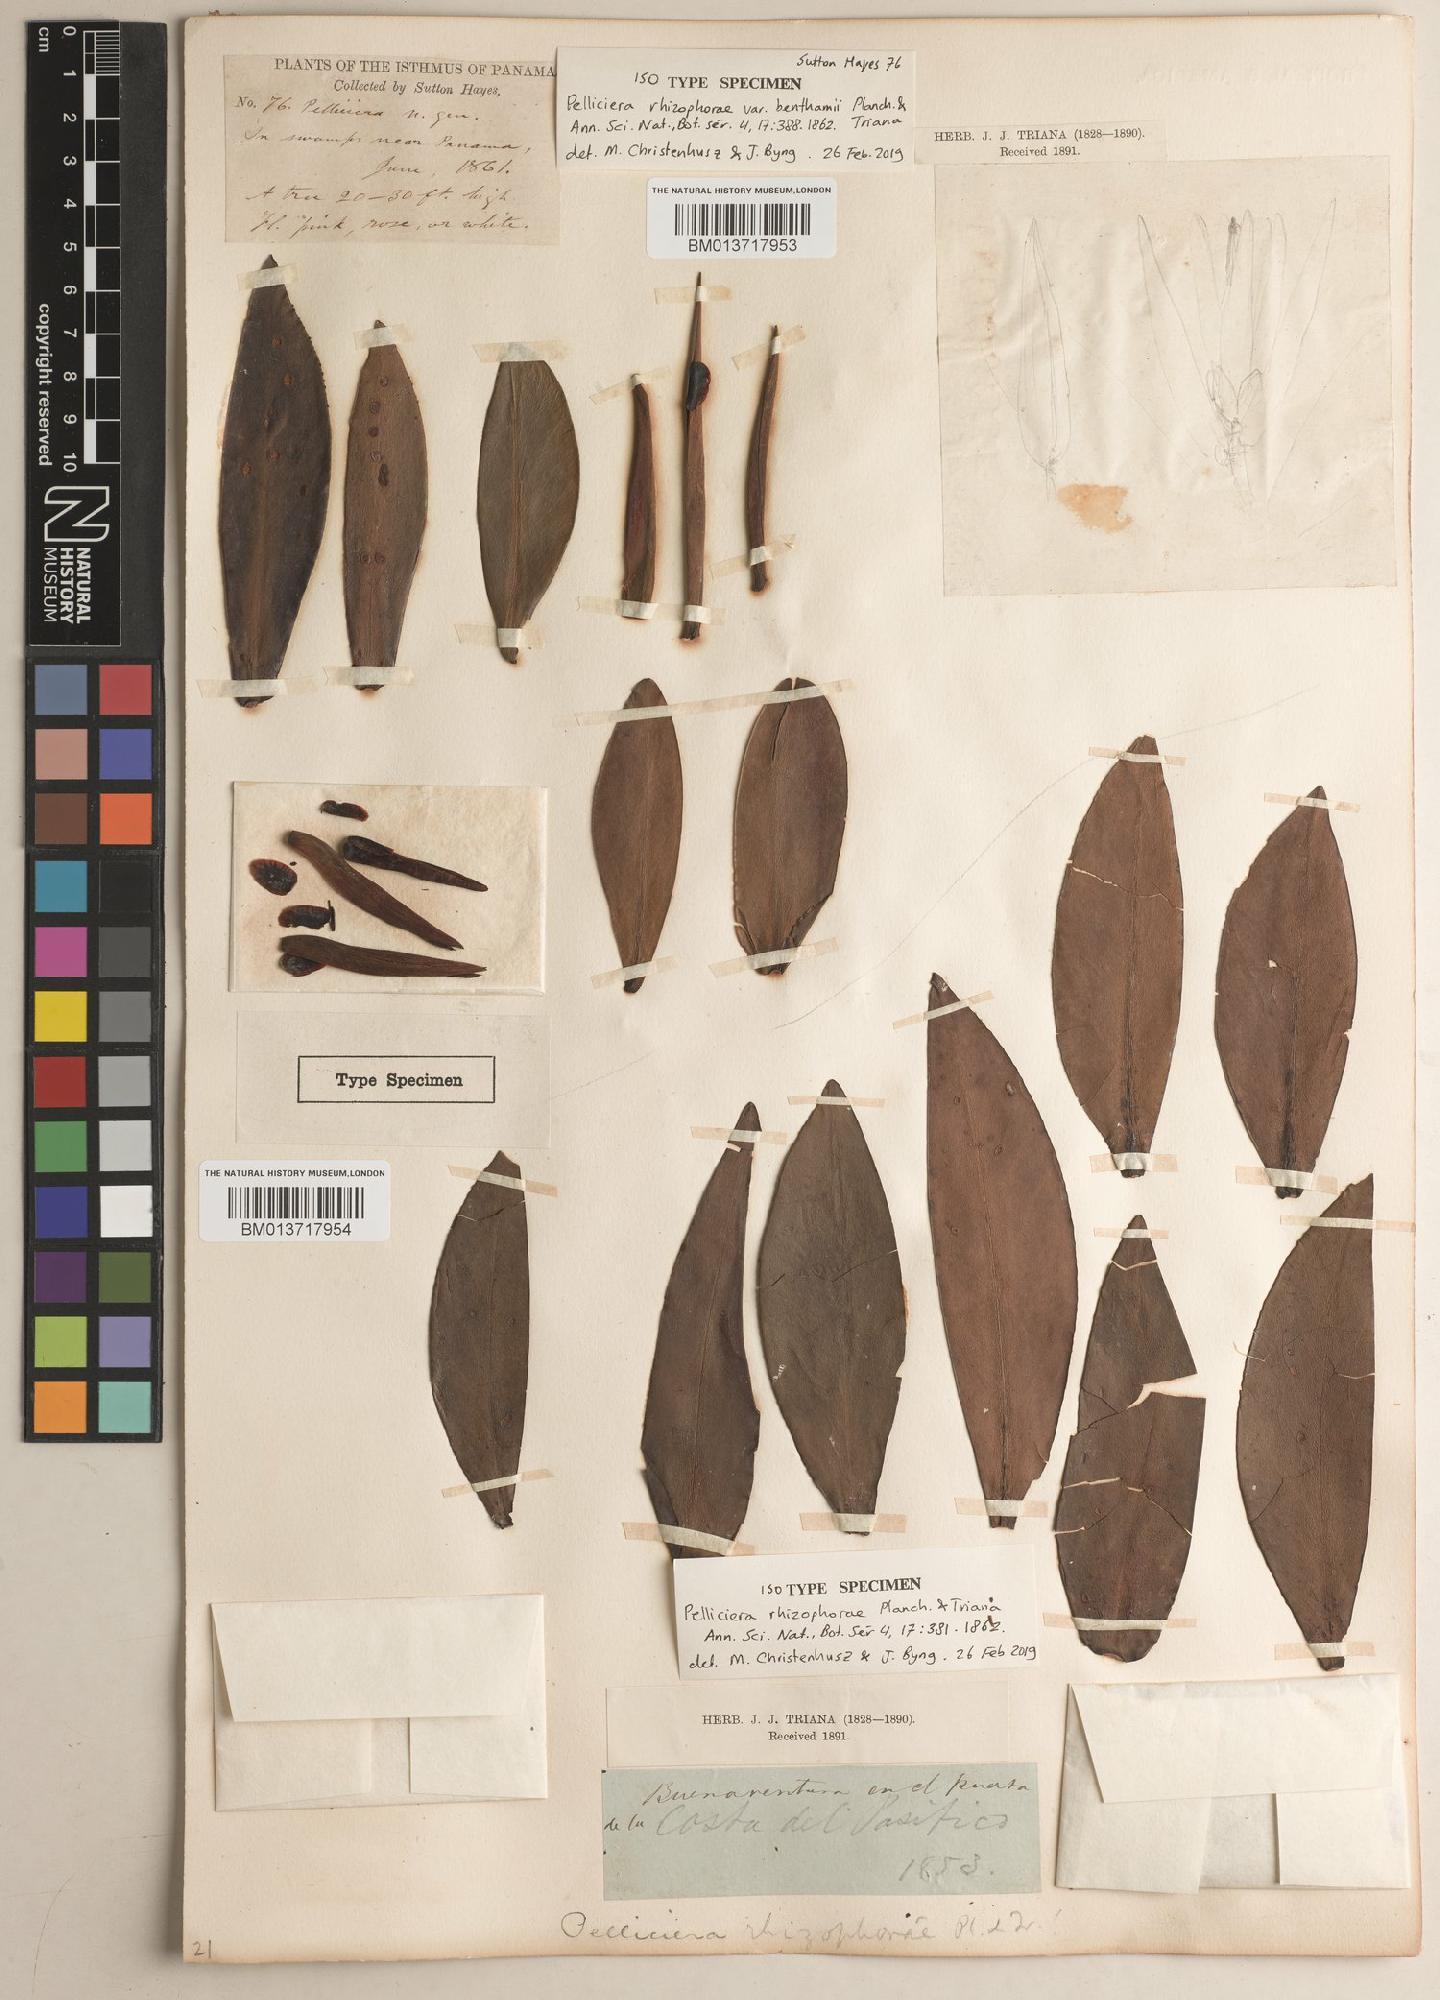 To NHMUK collection (Pelliciera rhizophorae Planch. & Triana; ISOTYPE; NHMUK:ecatalogue:9385460)